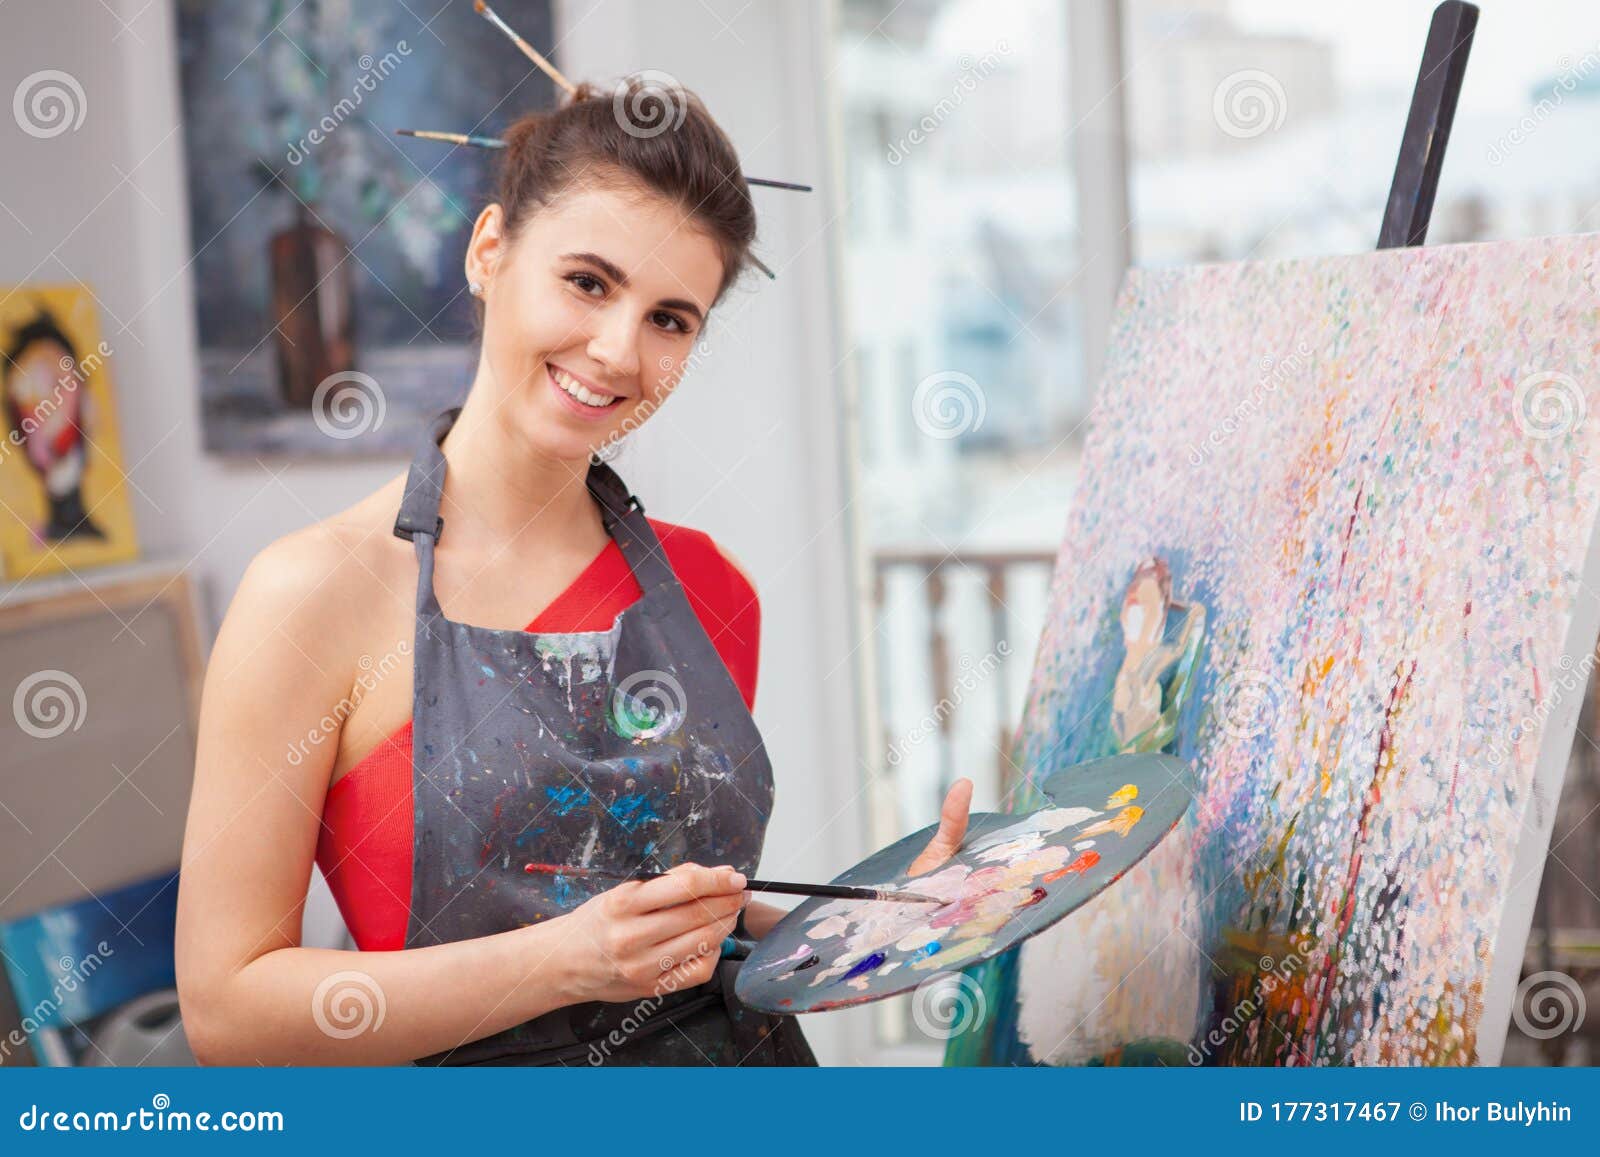 Young Woman Enjoying Painting At Her Art Studio Stock